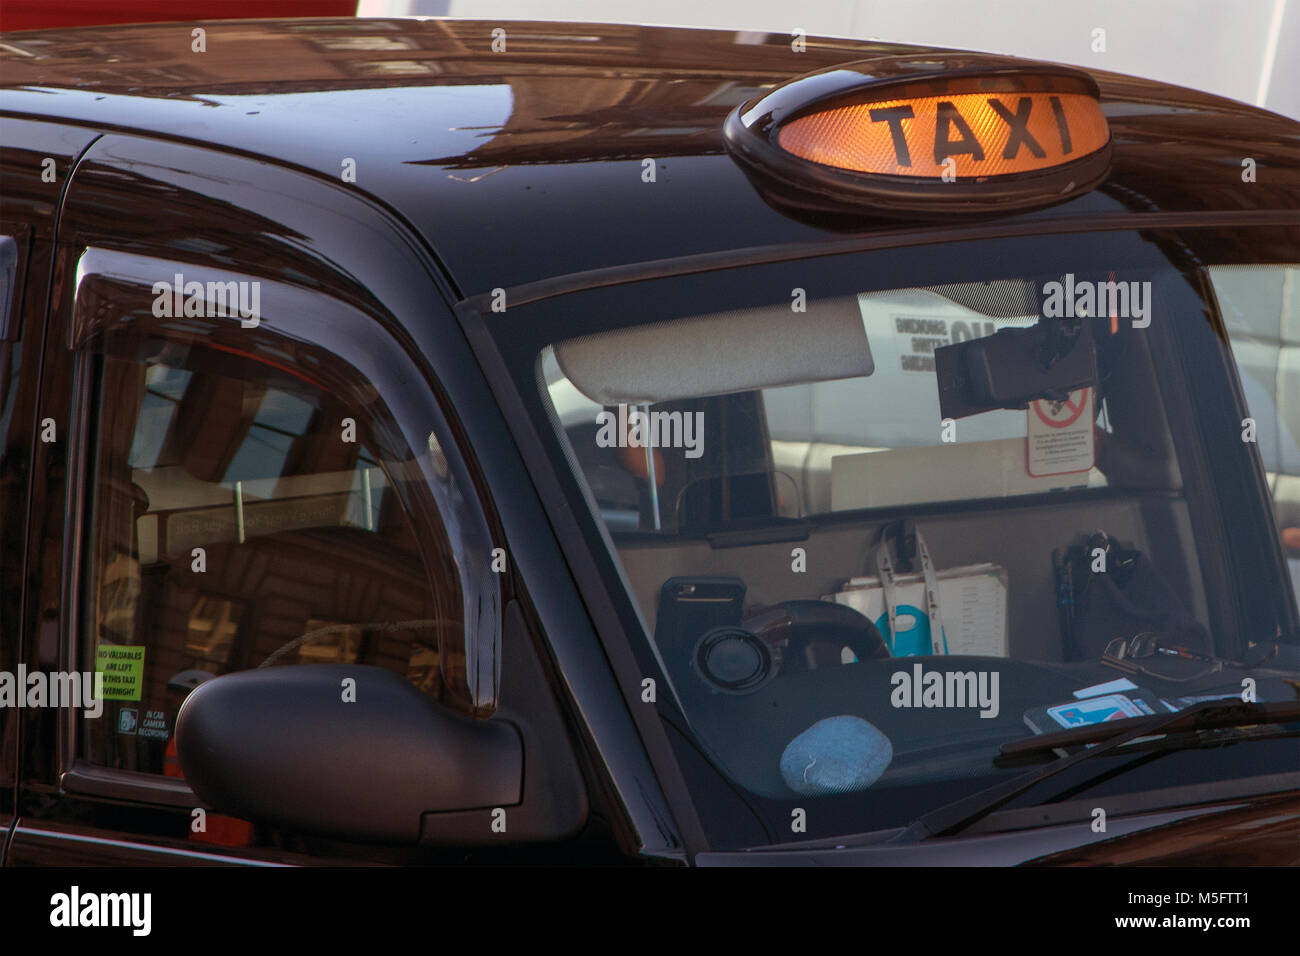 Taxi with roof light illuminated, Glasgow, Scotland Stock Photo